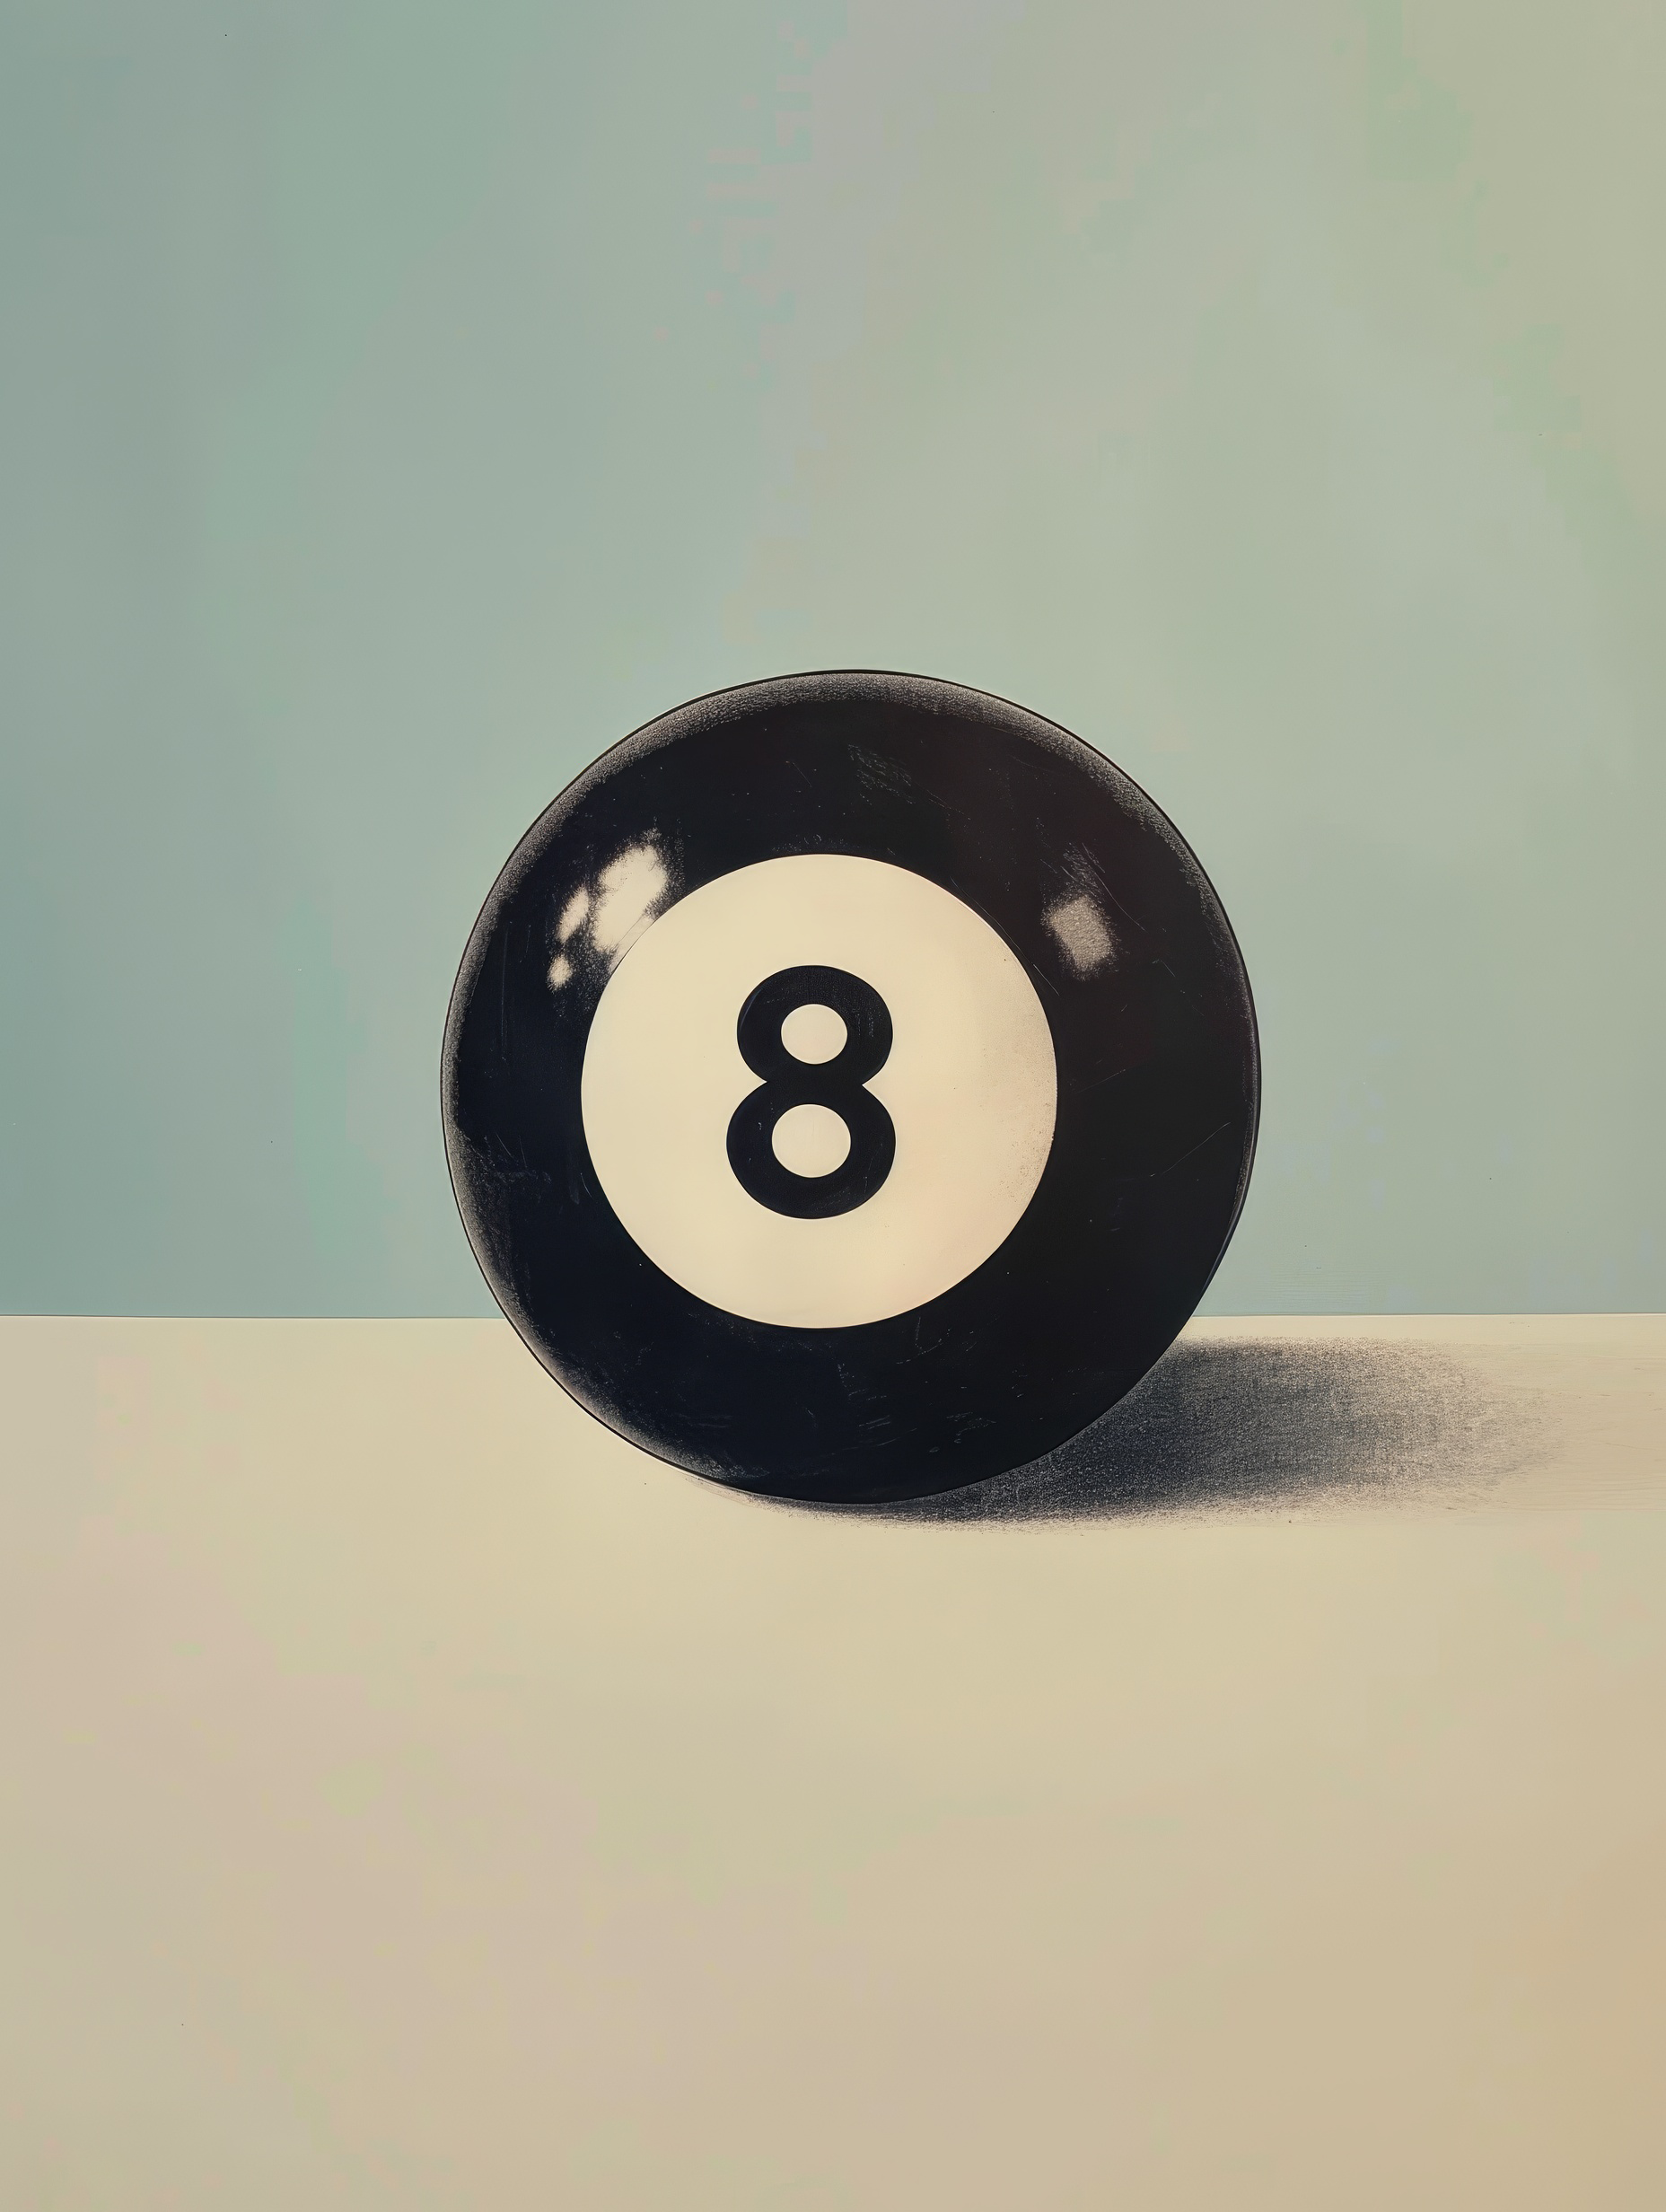 Billiard ball number eight black color